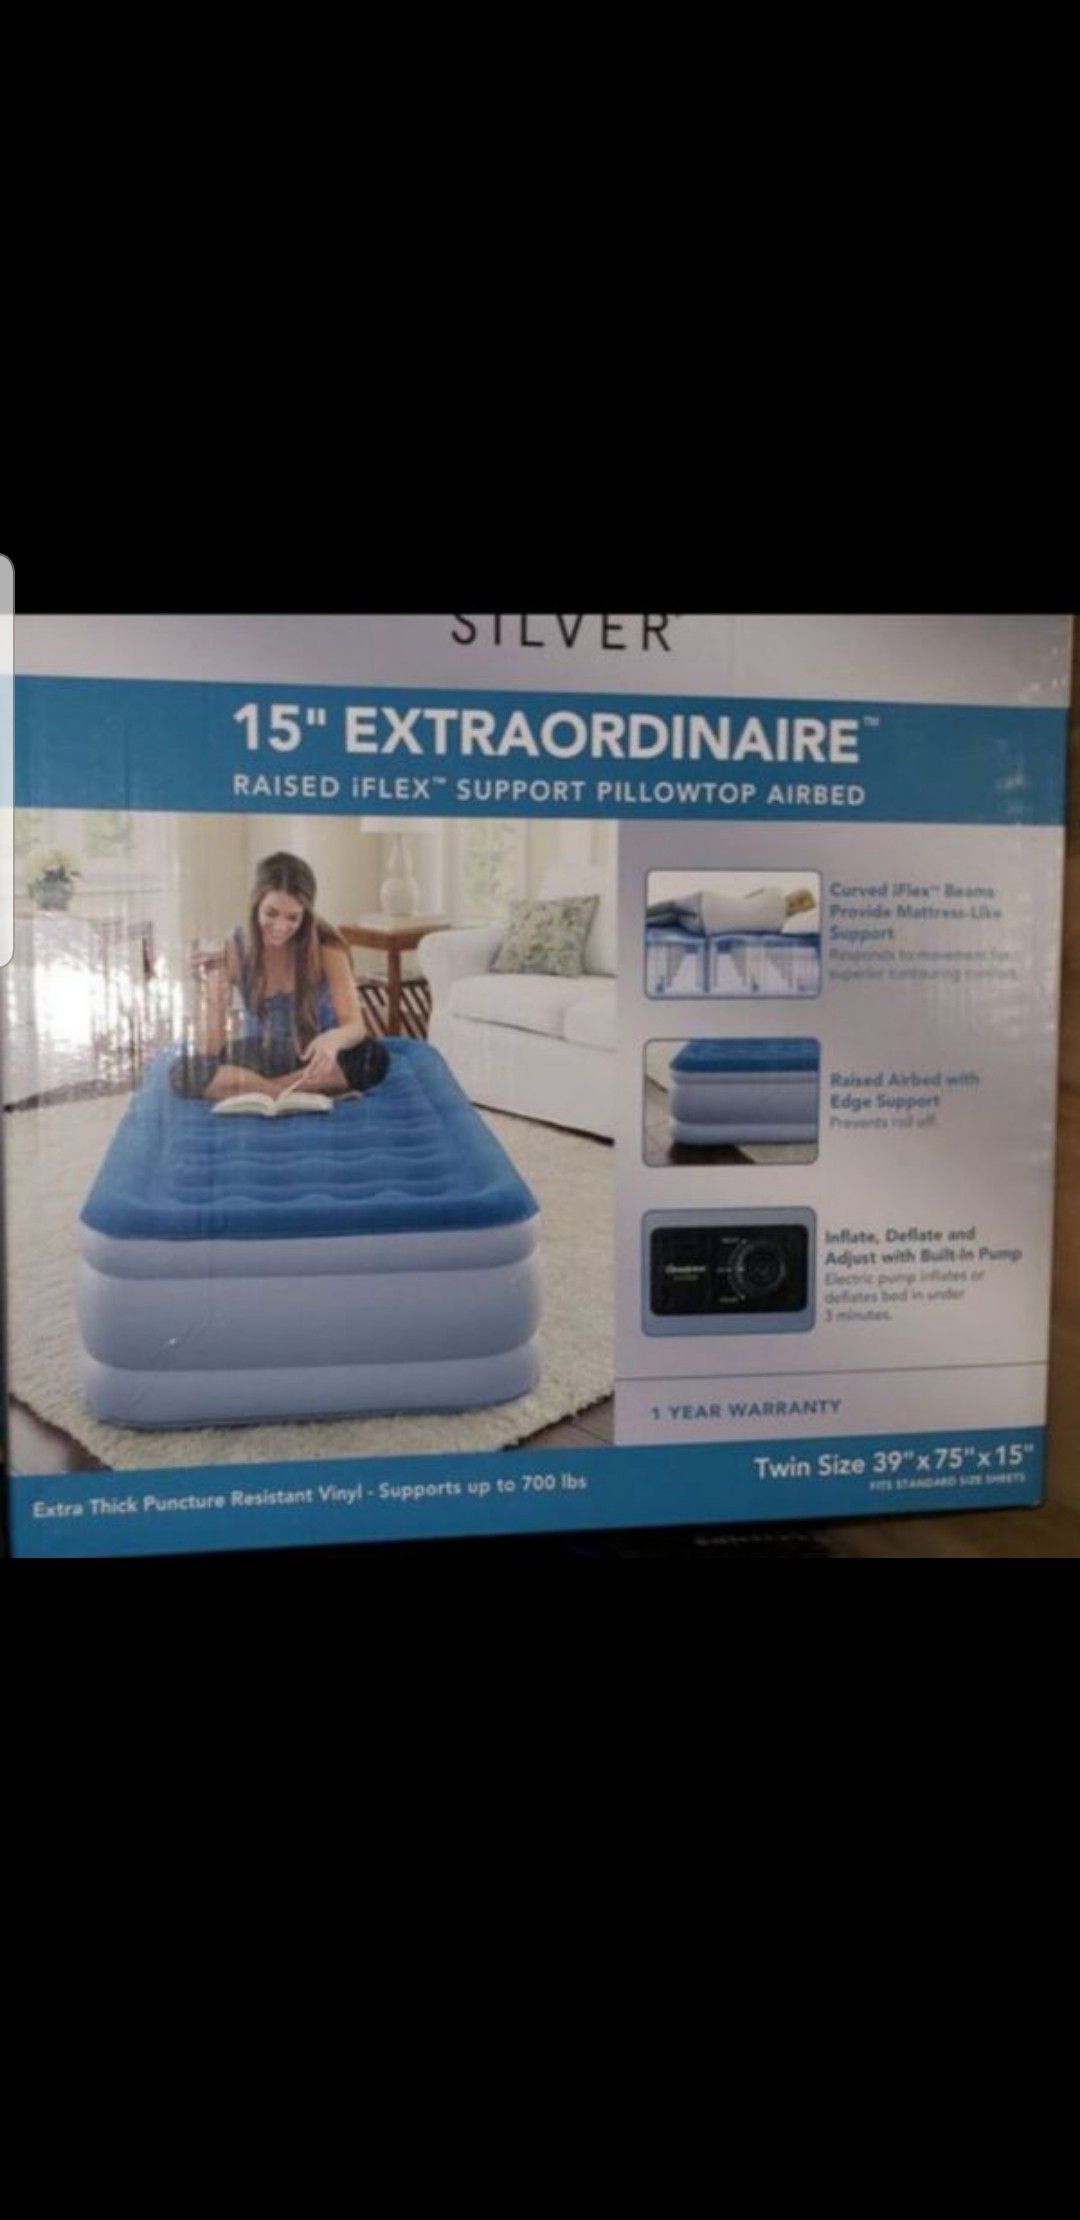 New Beautyrest 15" Silver Extraordinaire Raised iFlex, Pillowtop w/ built-in pump Twin☆Retail $79+ Tax☆